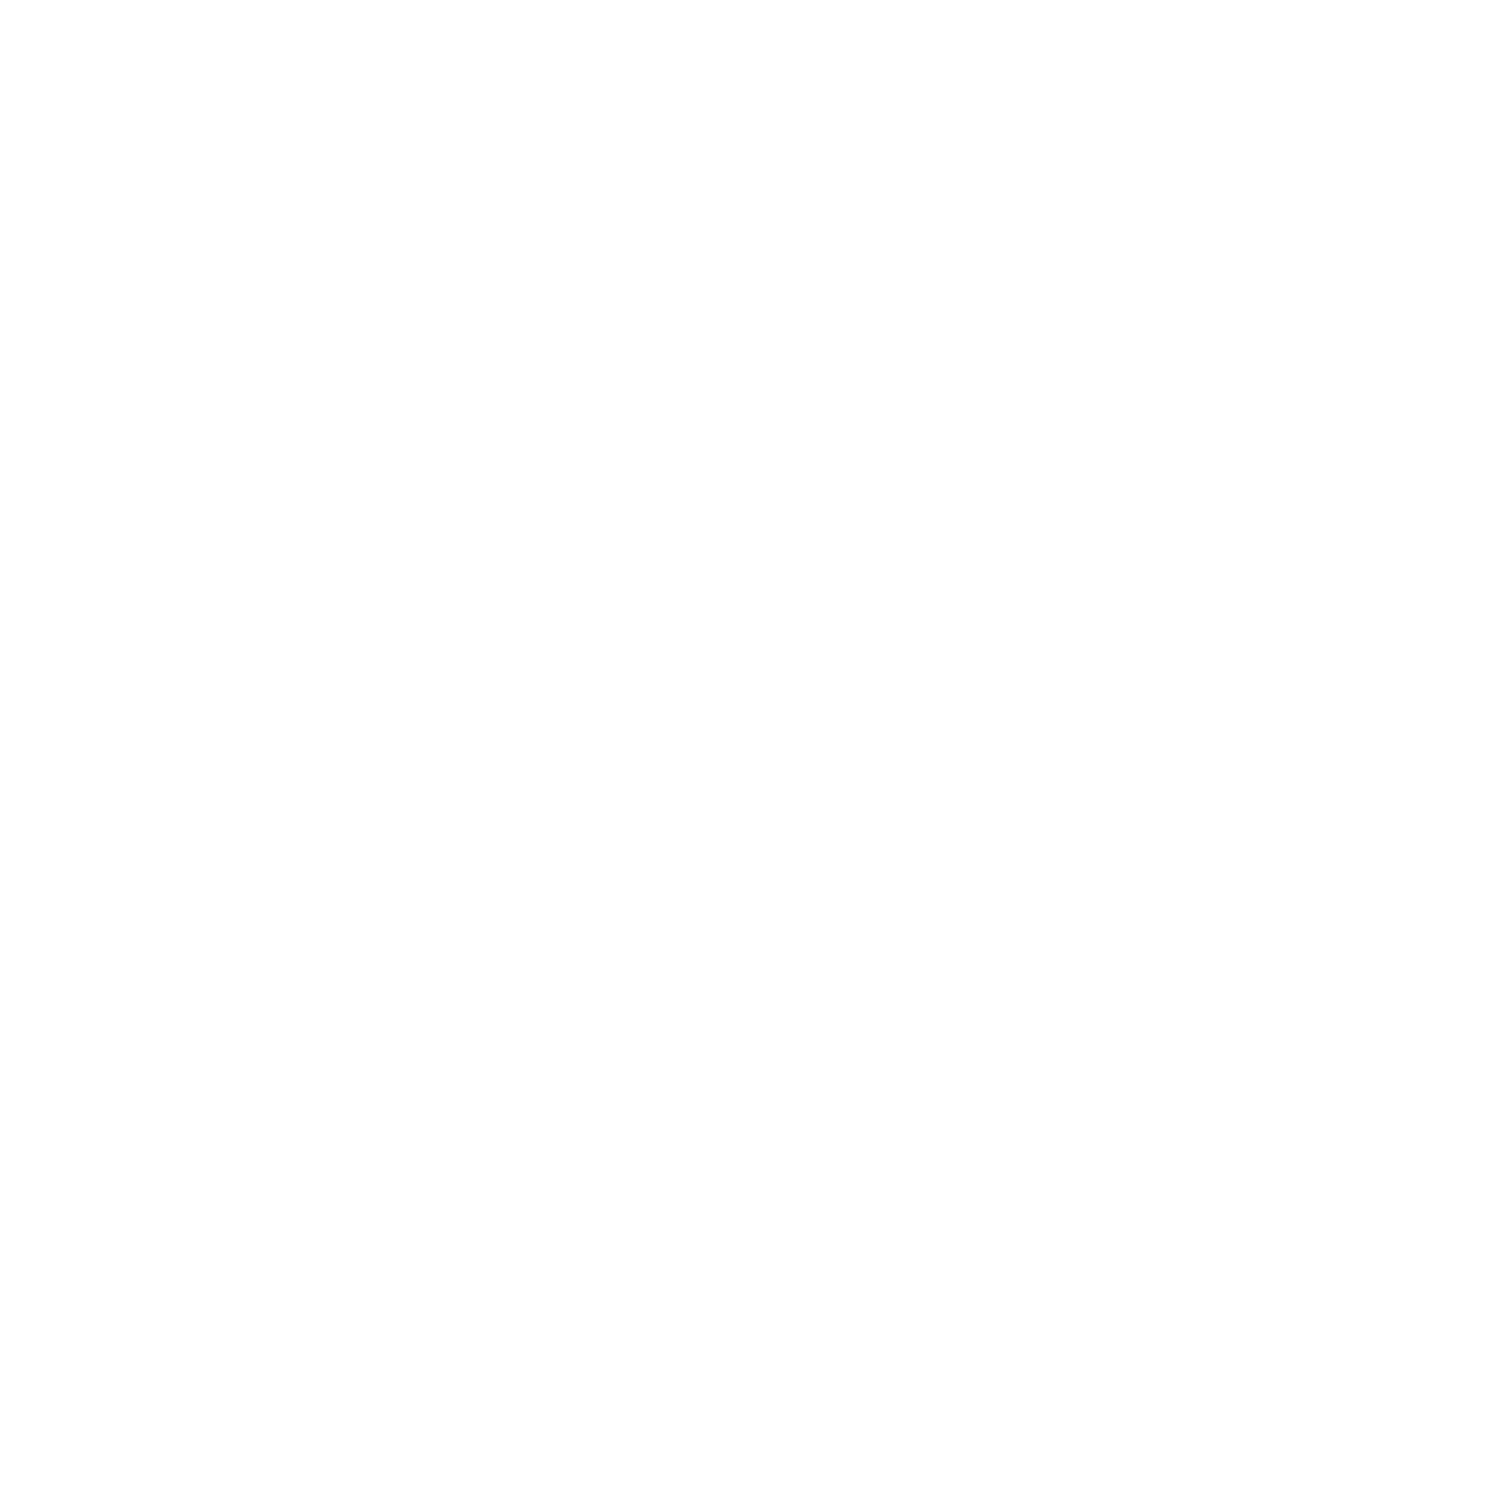 Saidy Mena Photos